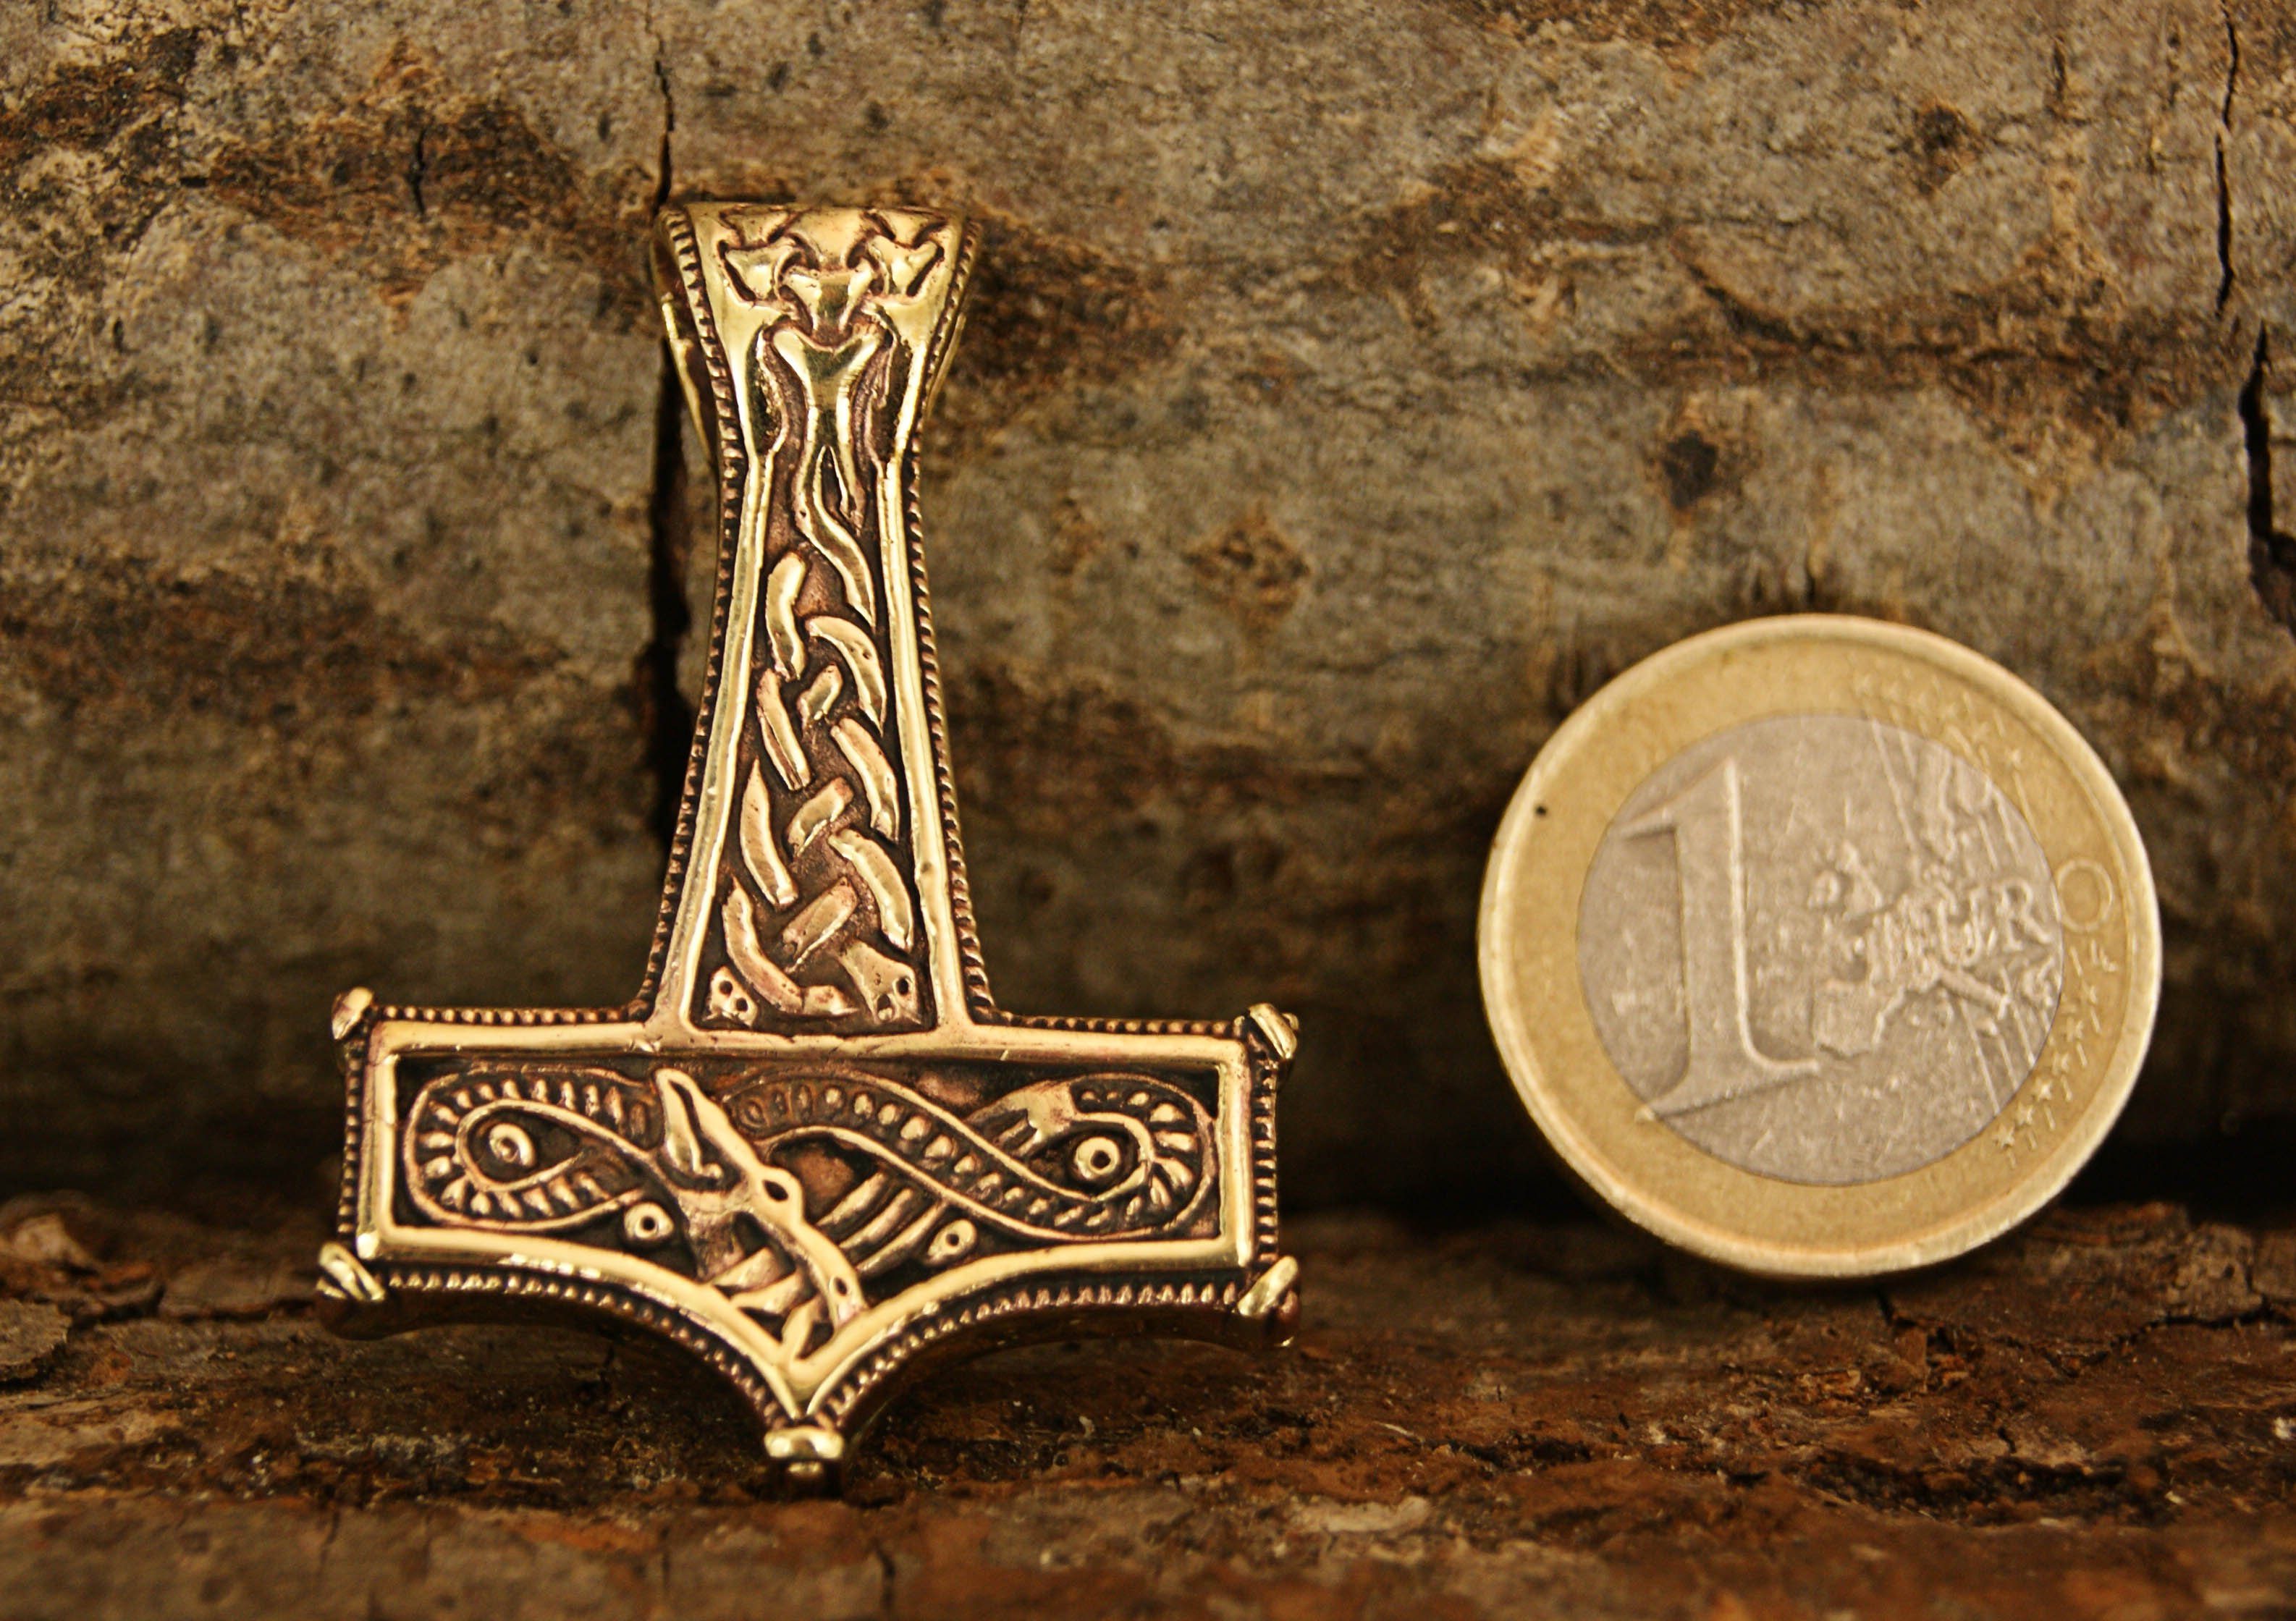 Thorshammer Midgard Kettenanhänger Kiss Midgardschlange Thorhammer Bronze of Leather